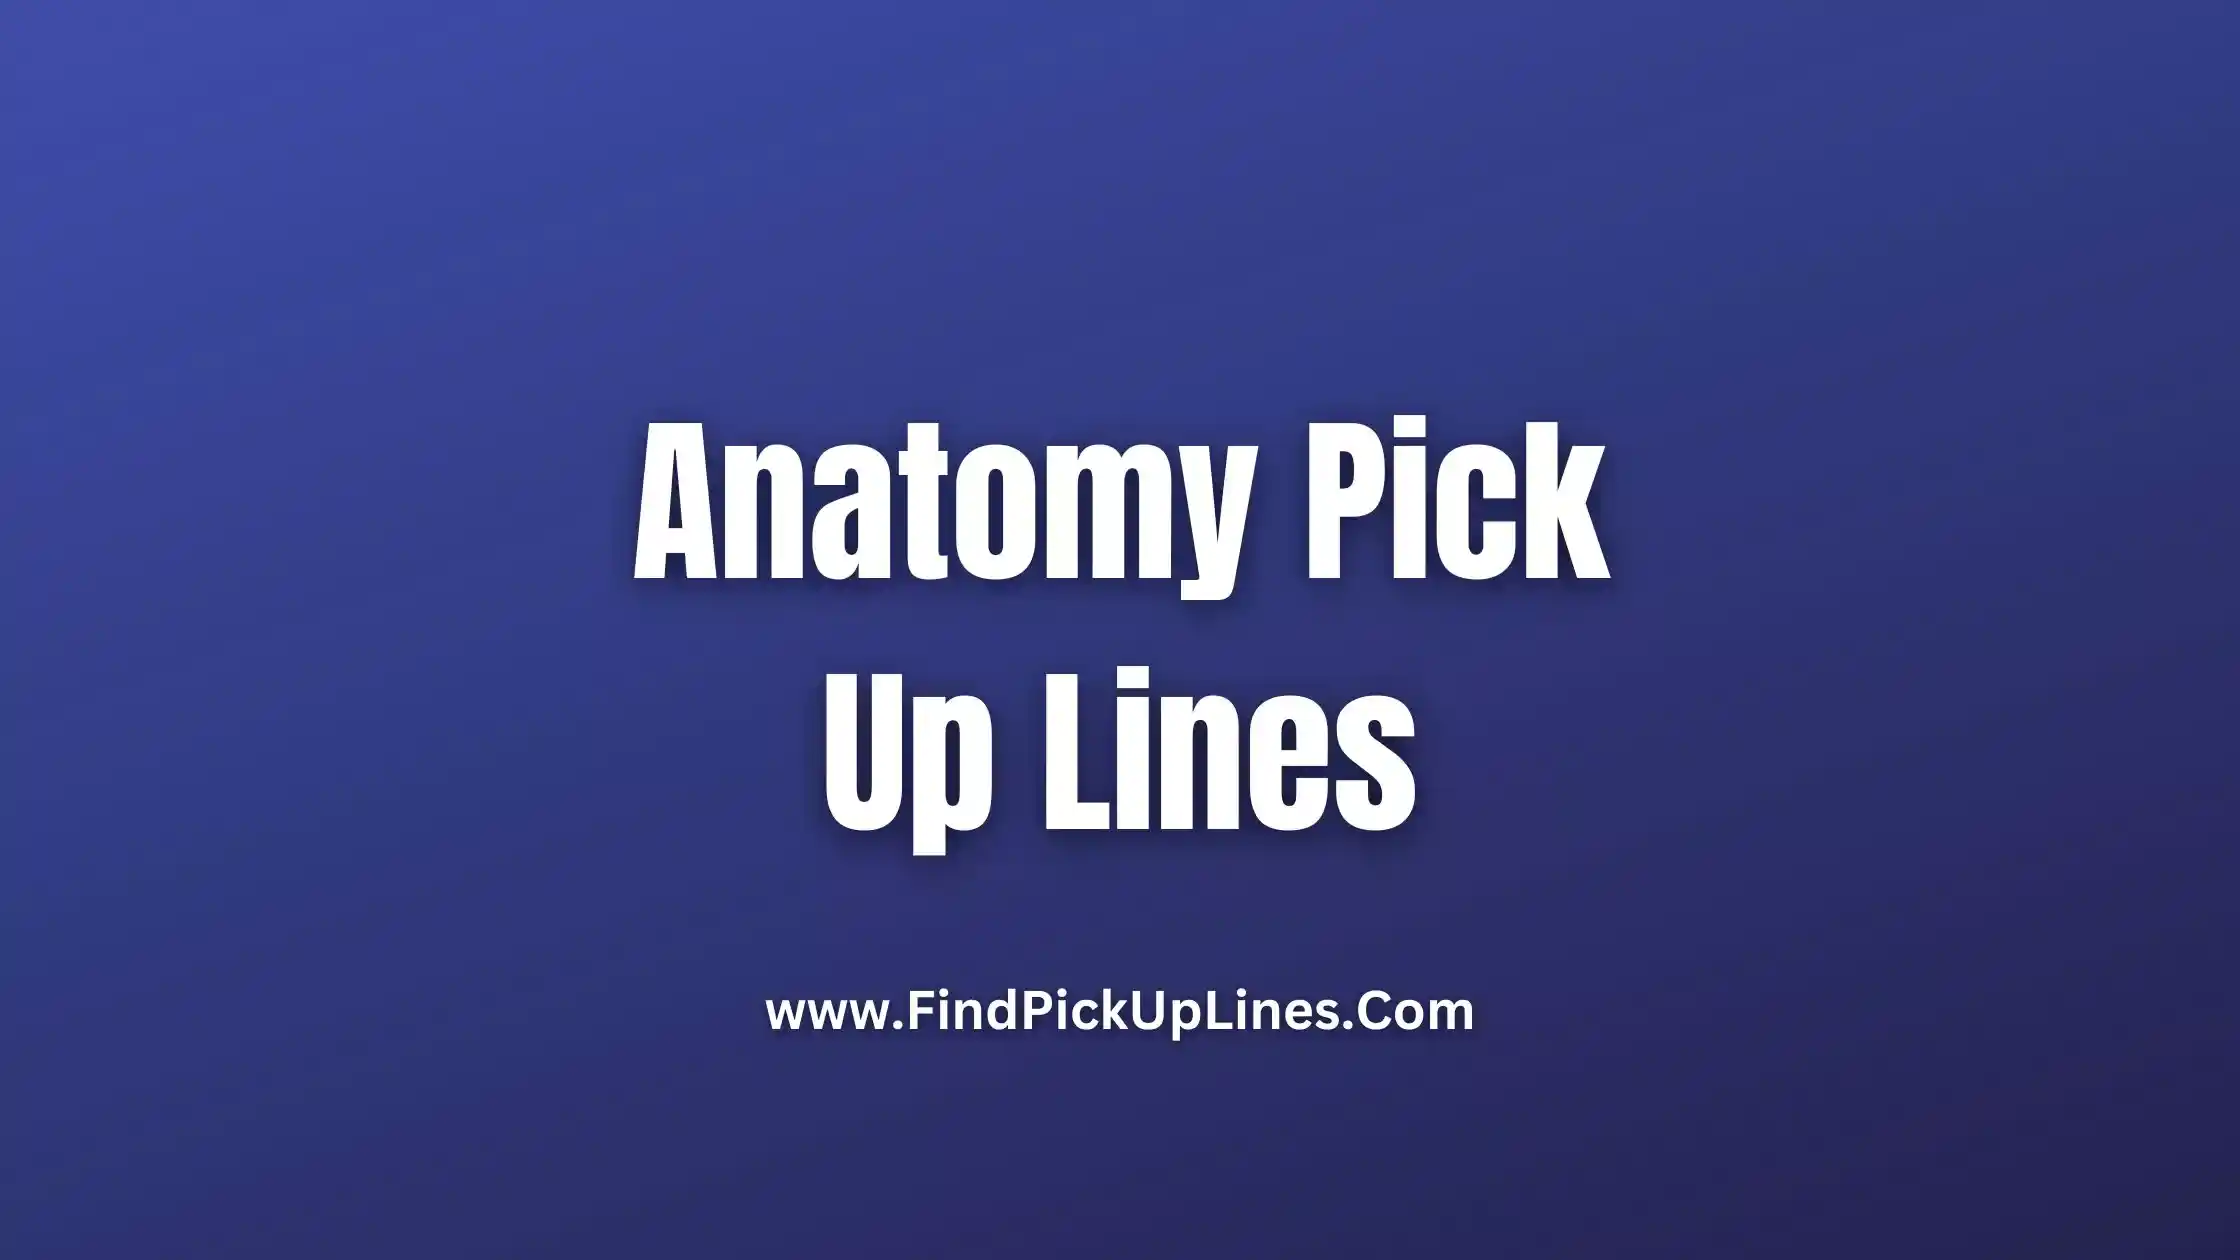 Anatomy Pick Up Lines